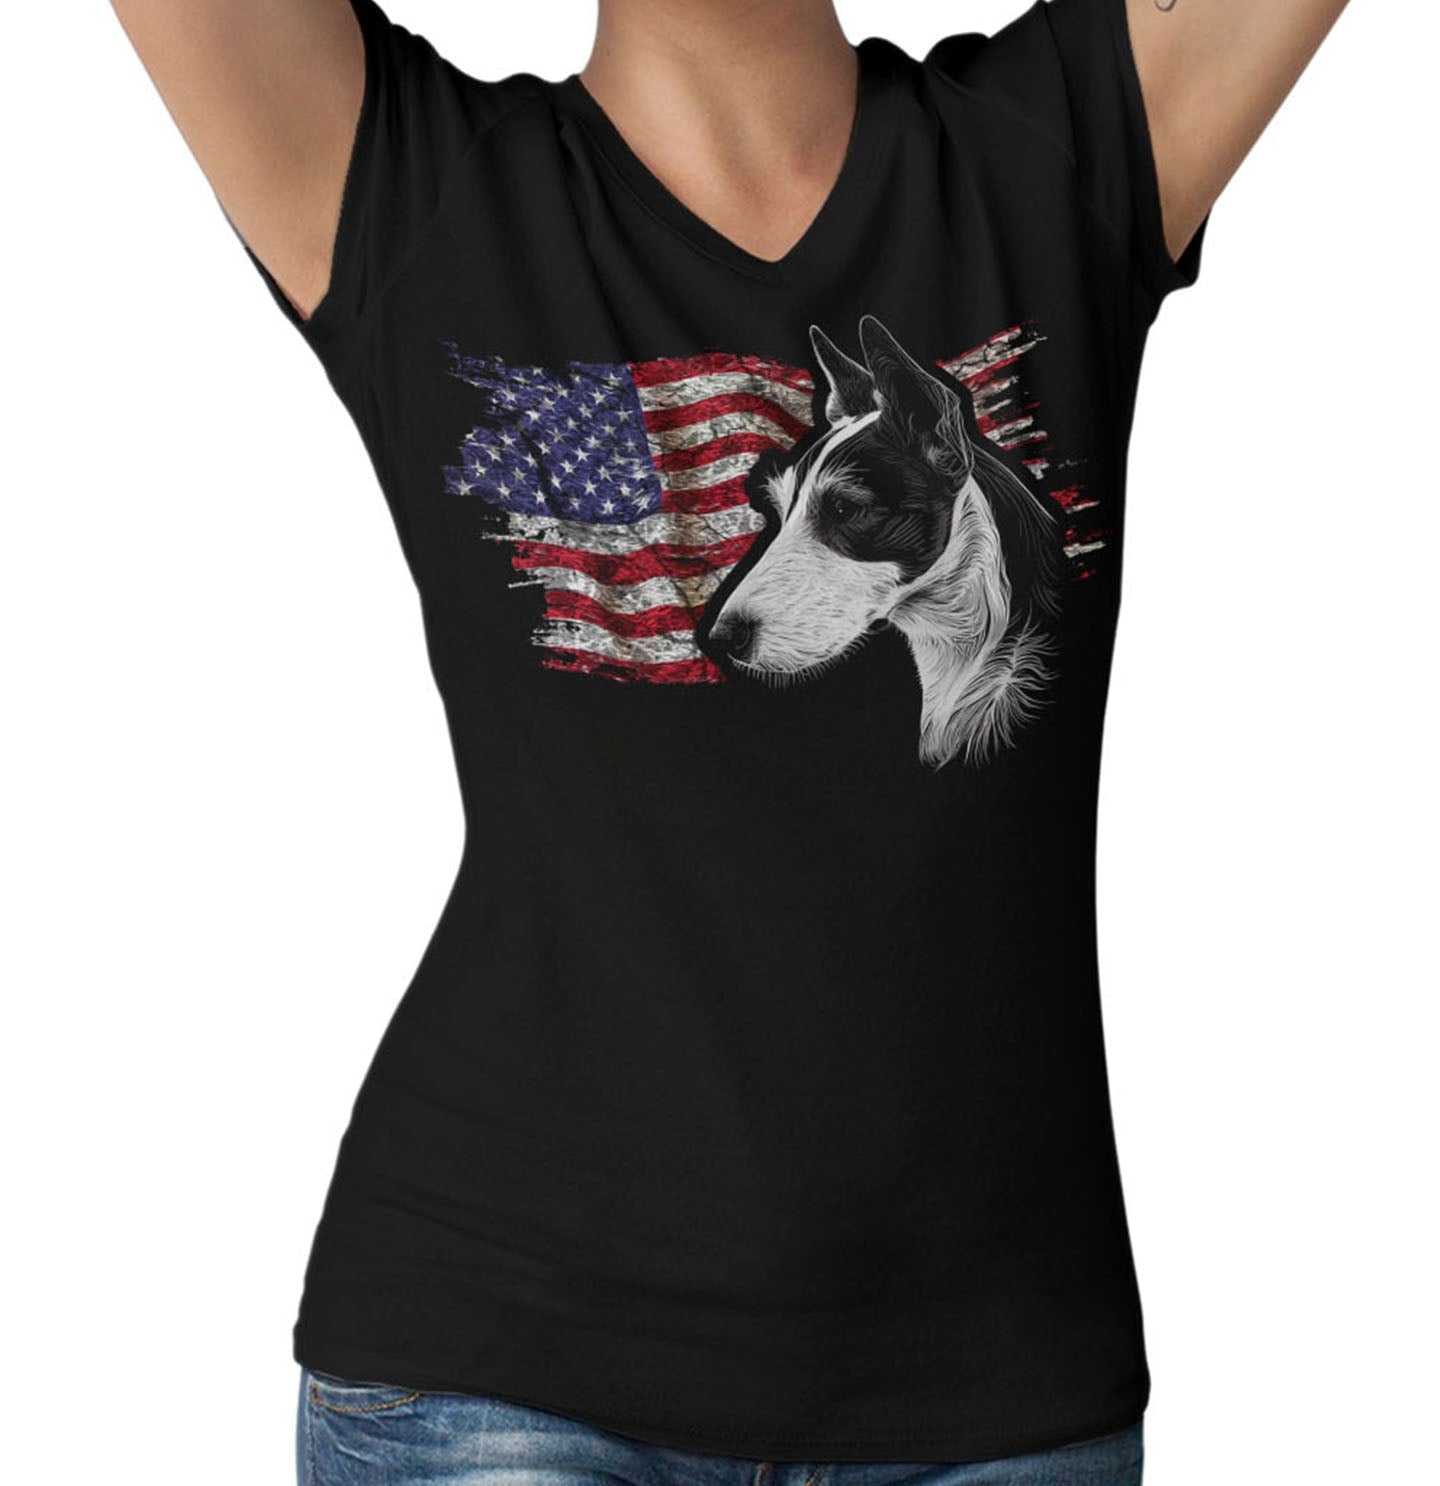 Patriotic Smooth Fox Terrier American Flag - Women's V-Neck T-Shirt